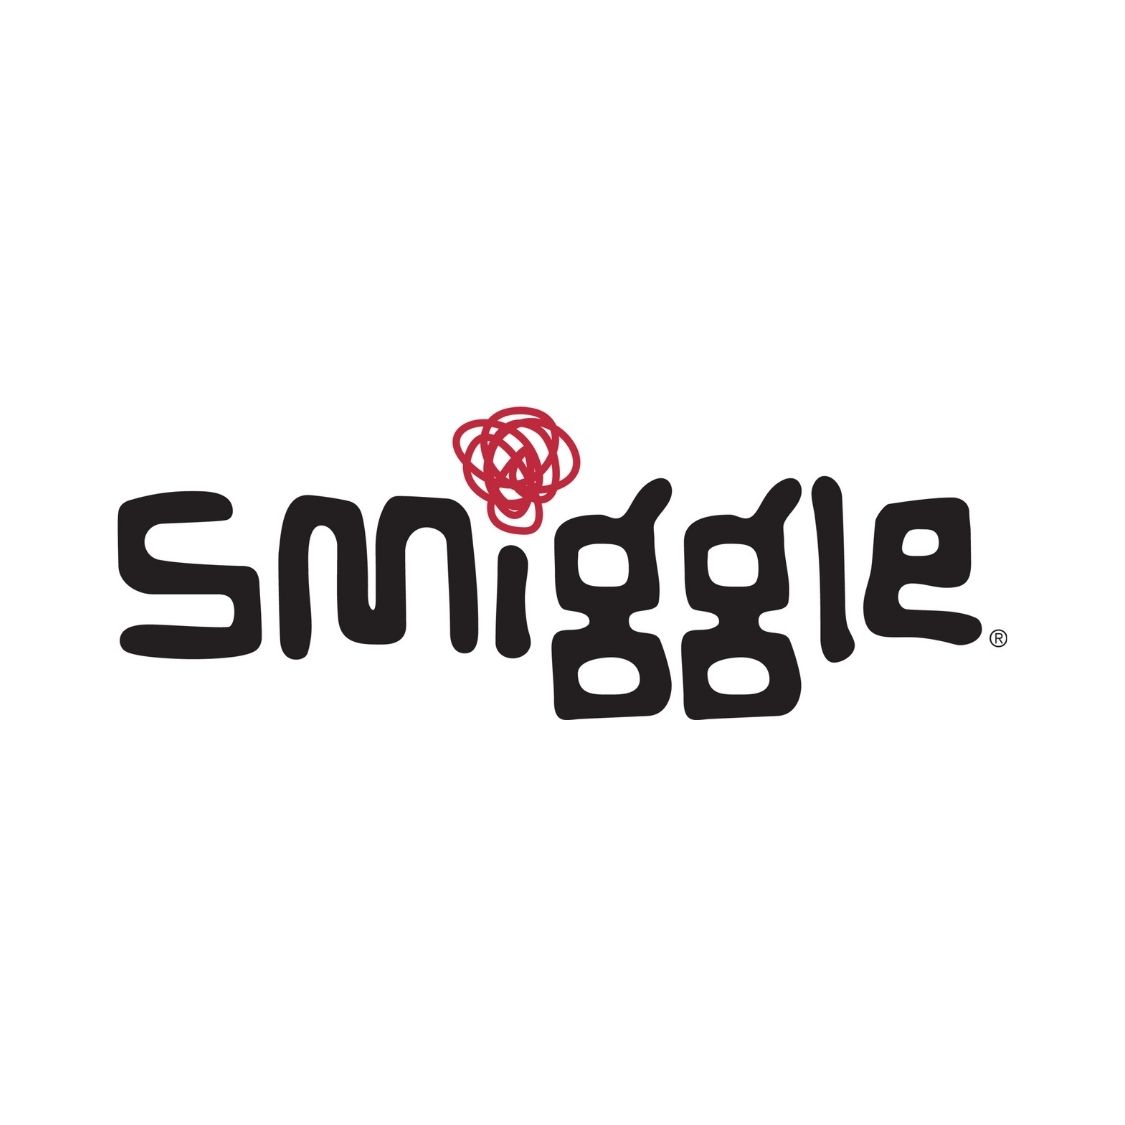 Smiggle Logo.jpg